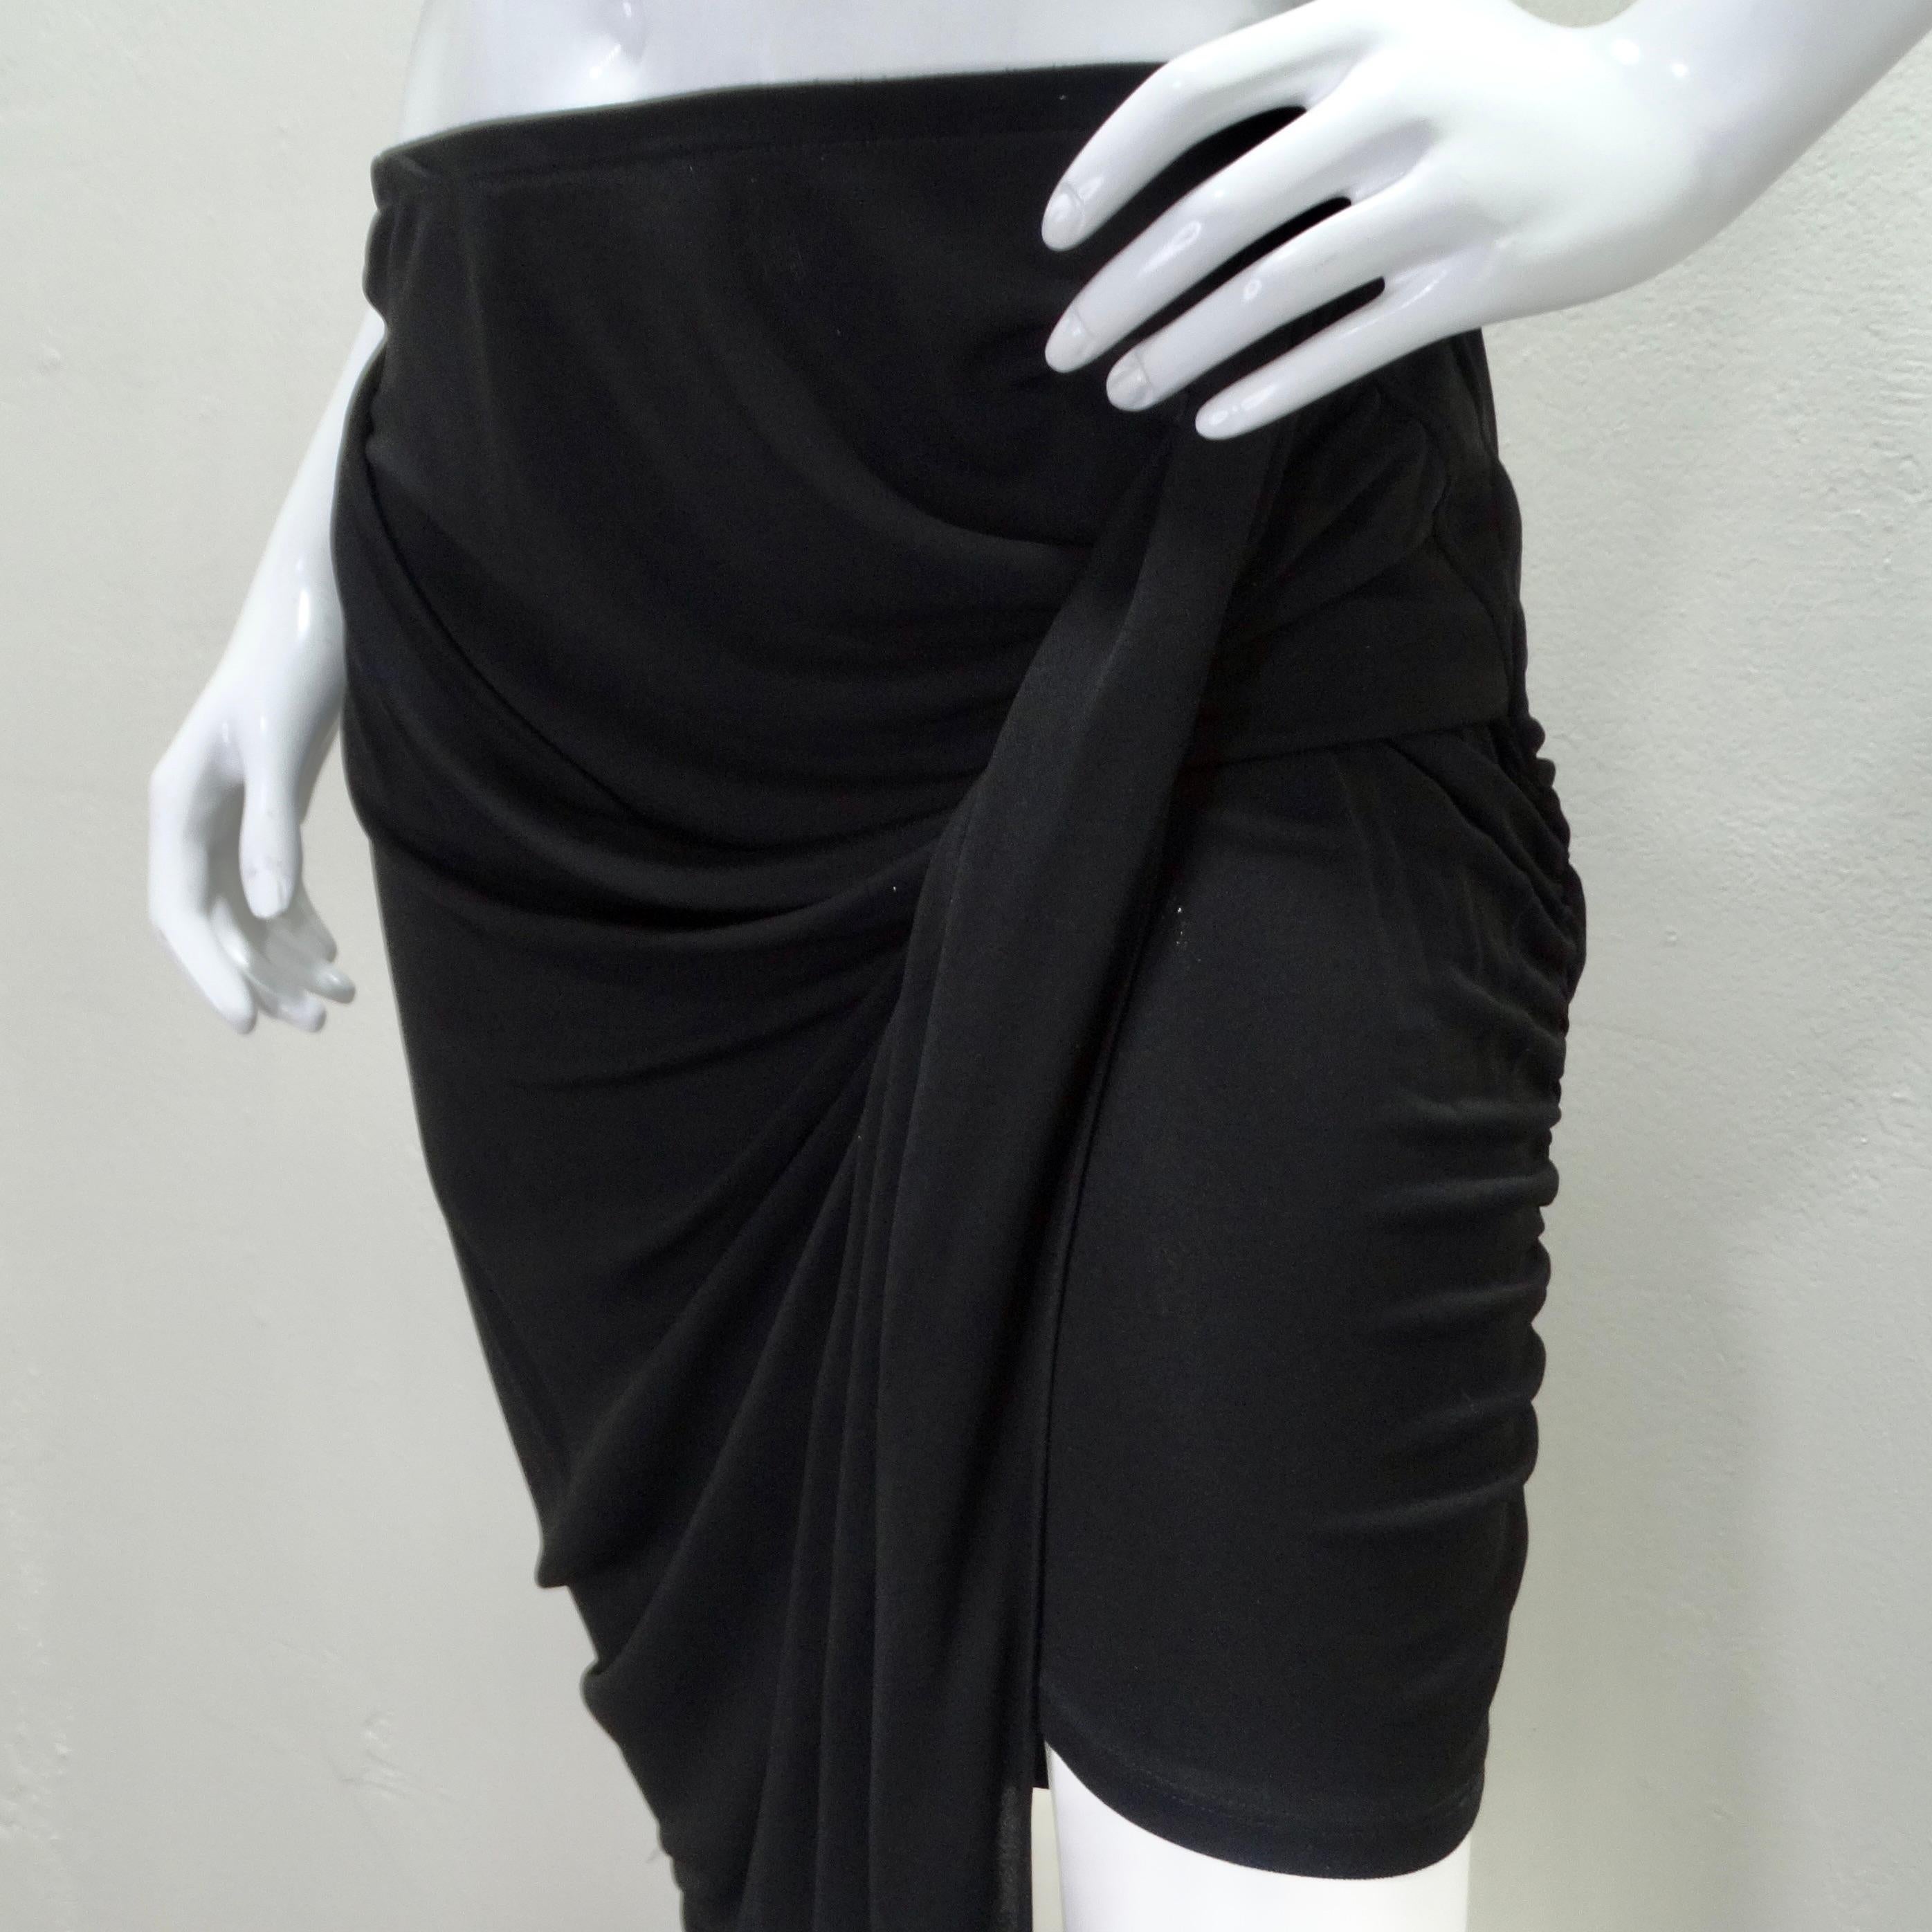 Mugler Black Draped Skirt In Excellent Condition For Sale In Scottsdale, AZ